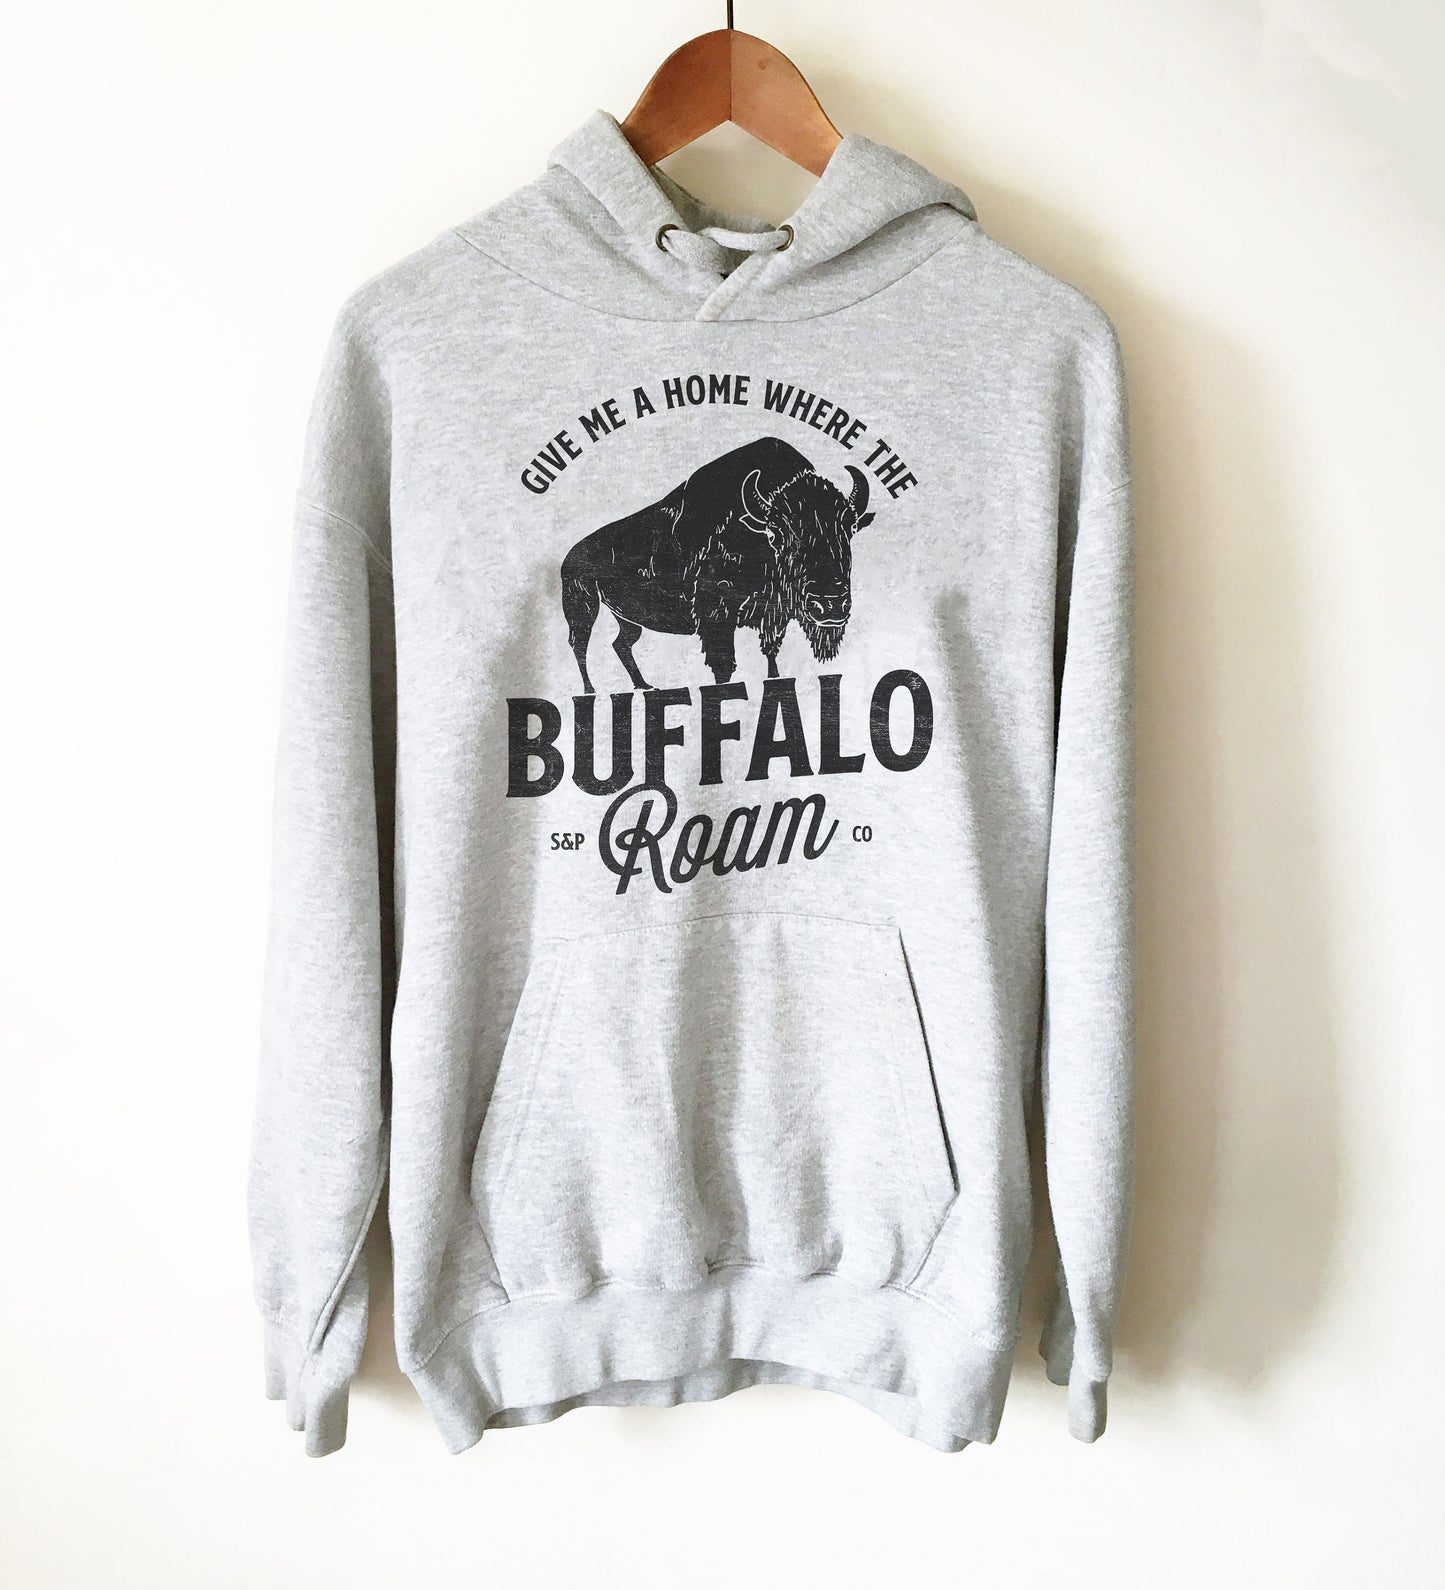 Give Me A Home Where The Buffalo Roam Hoodie - Buffalo Shirt, Wyoming Shirt, Yellowstone Park Shirt, Bison Shirt, Oklahoma Shirt